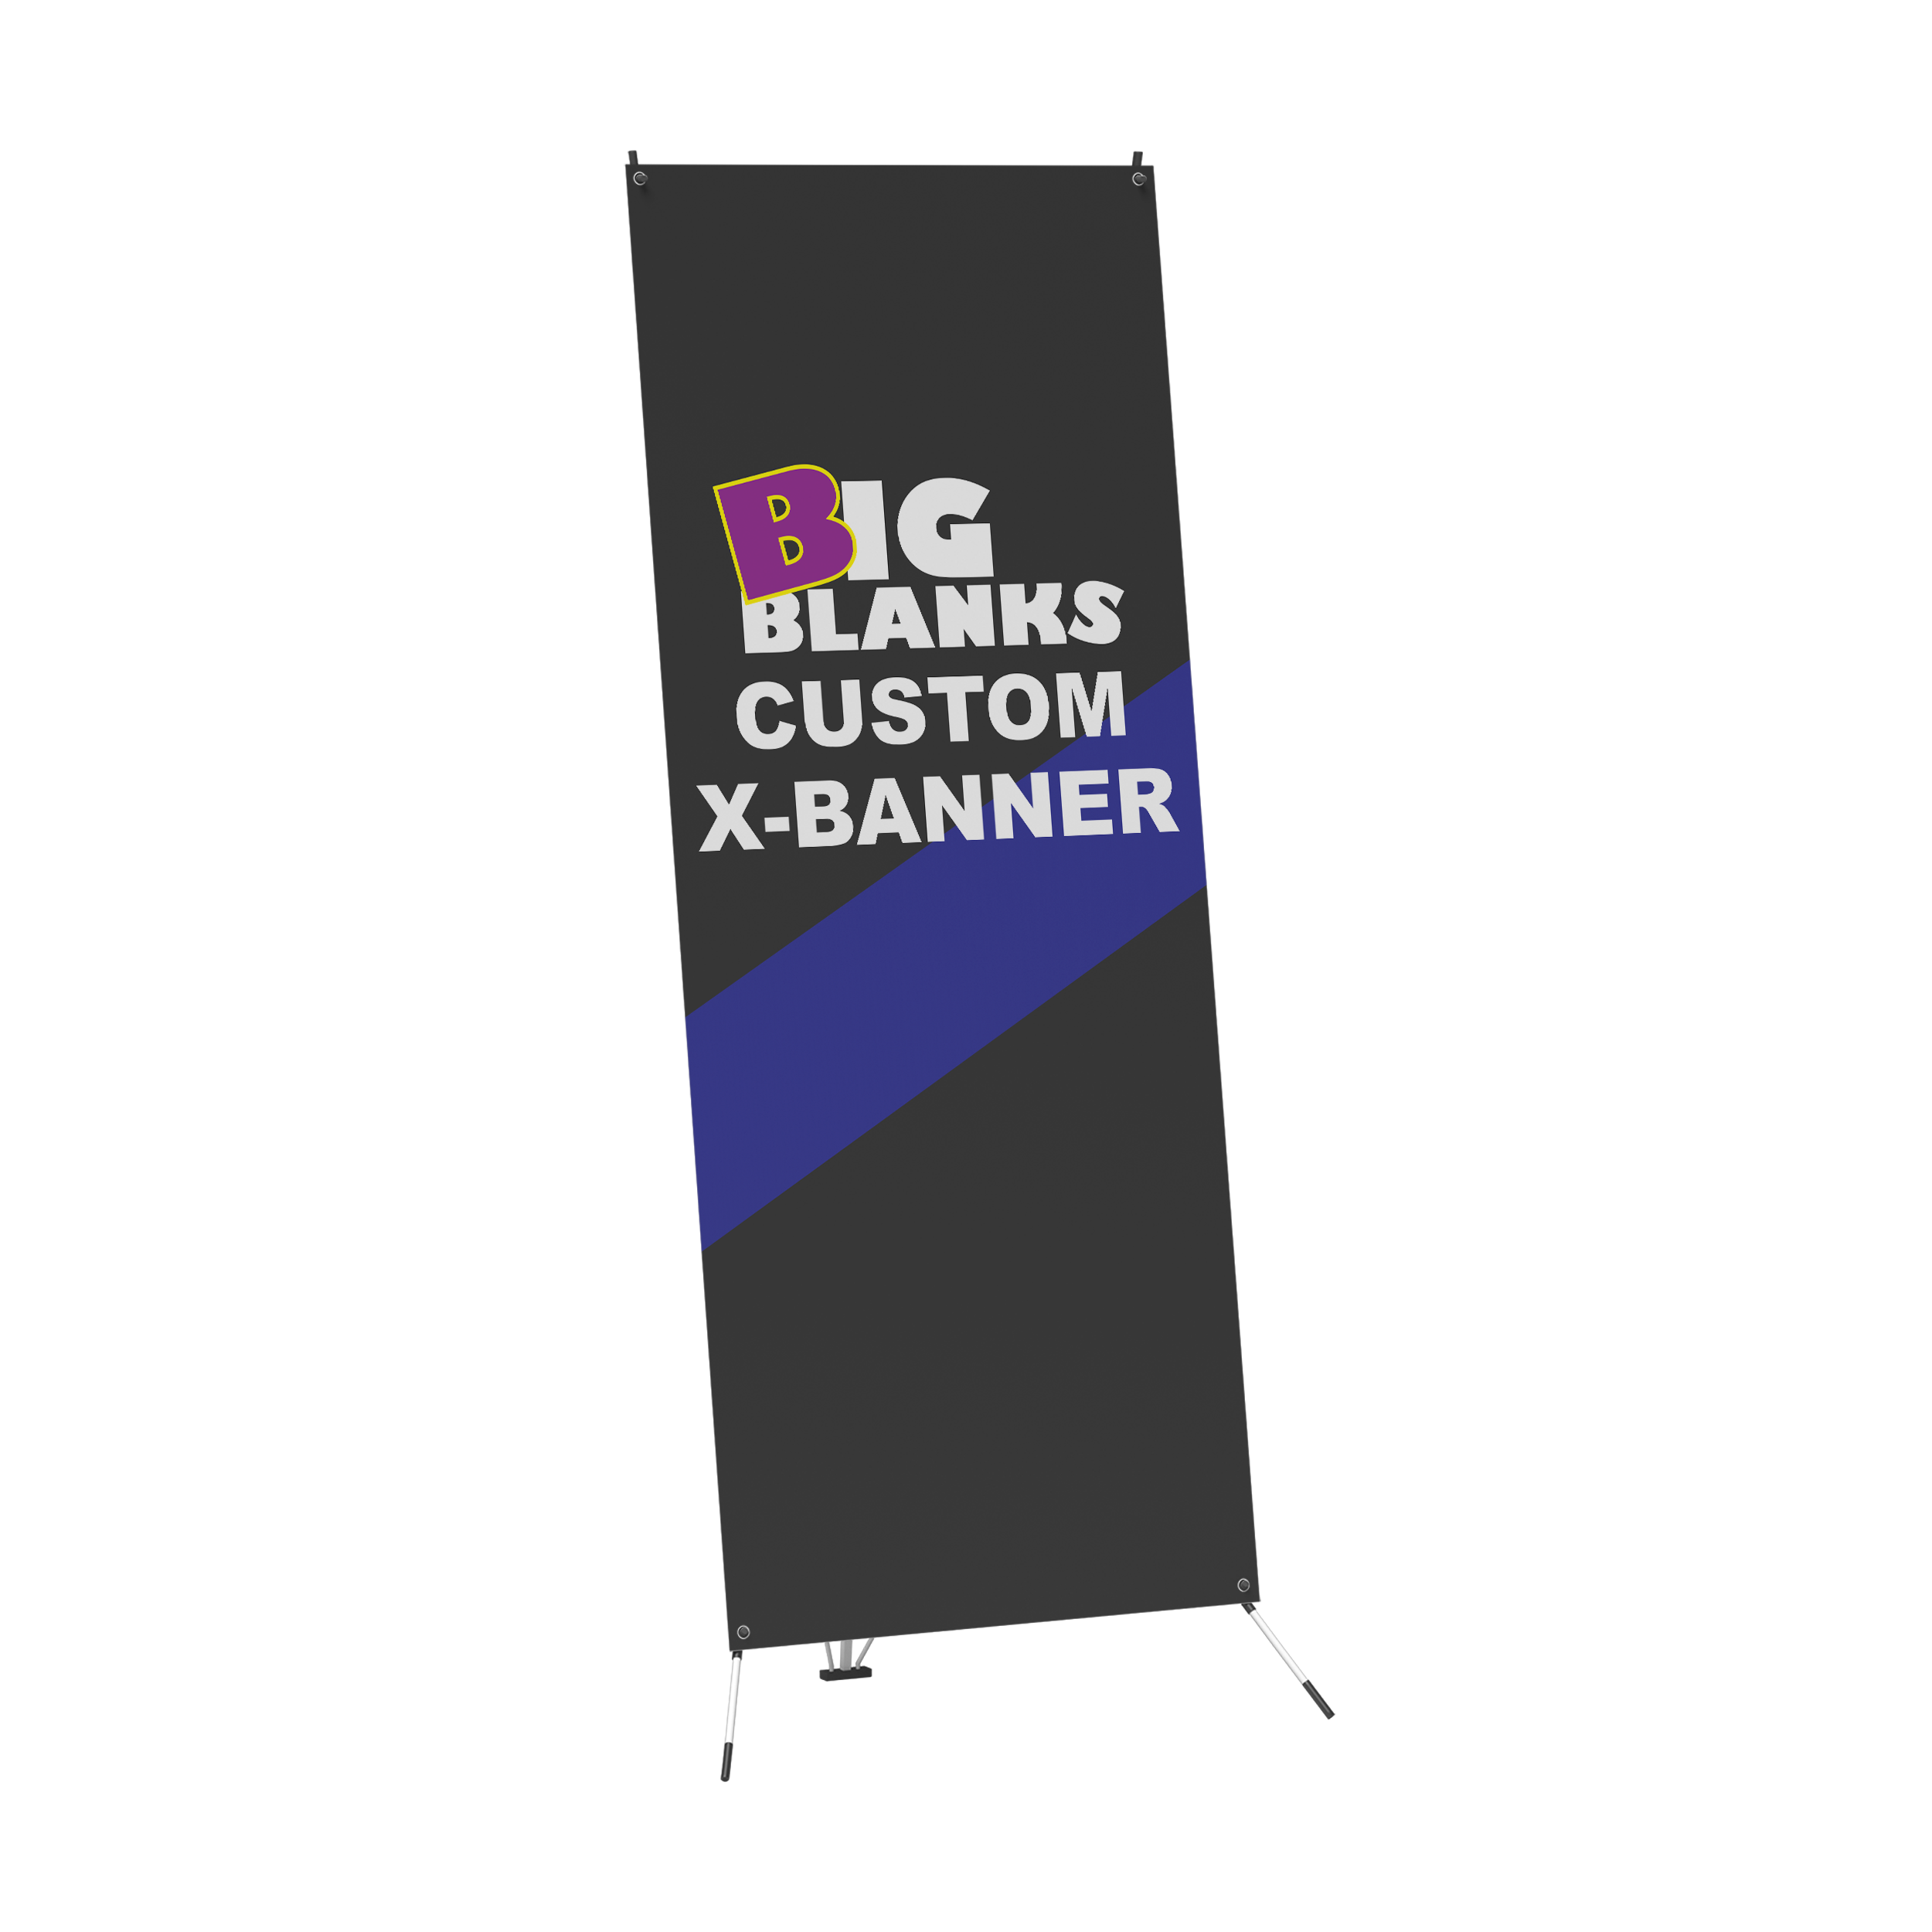 BigBlanks: Custom X Banner